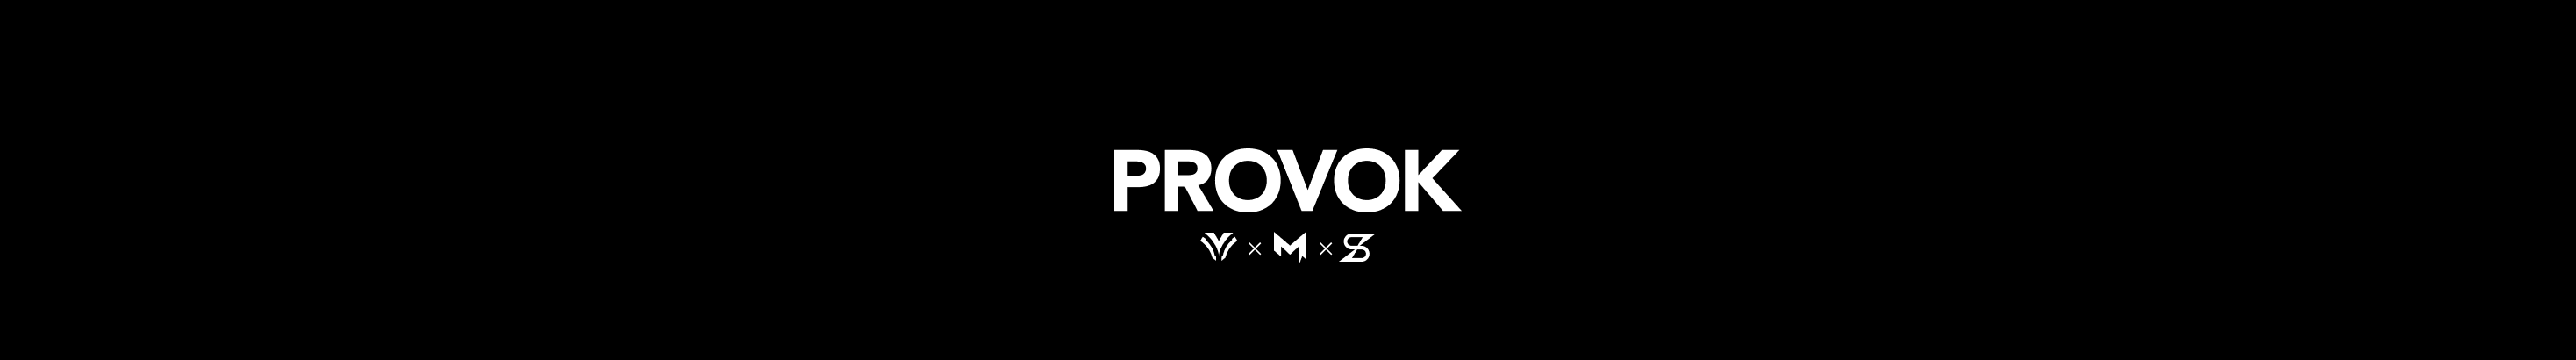 PROVOK /'s profile banner